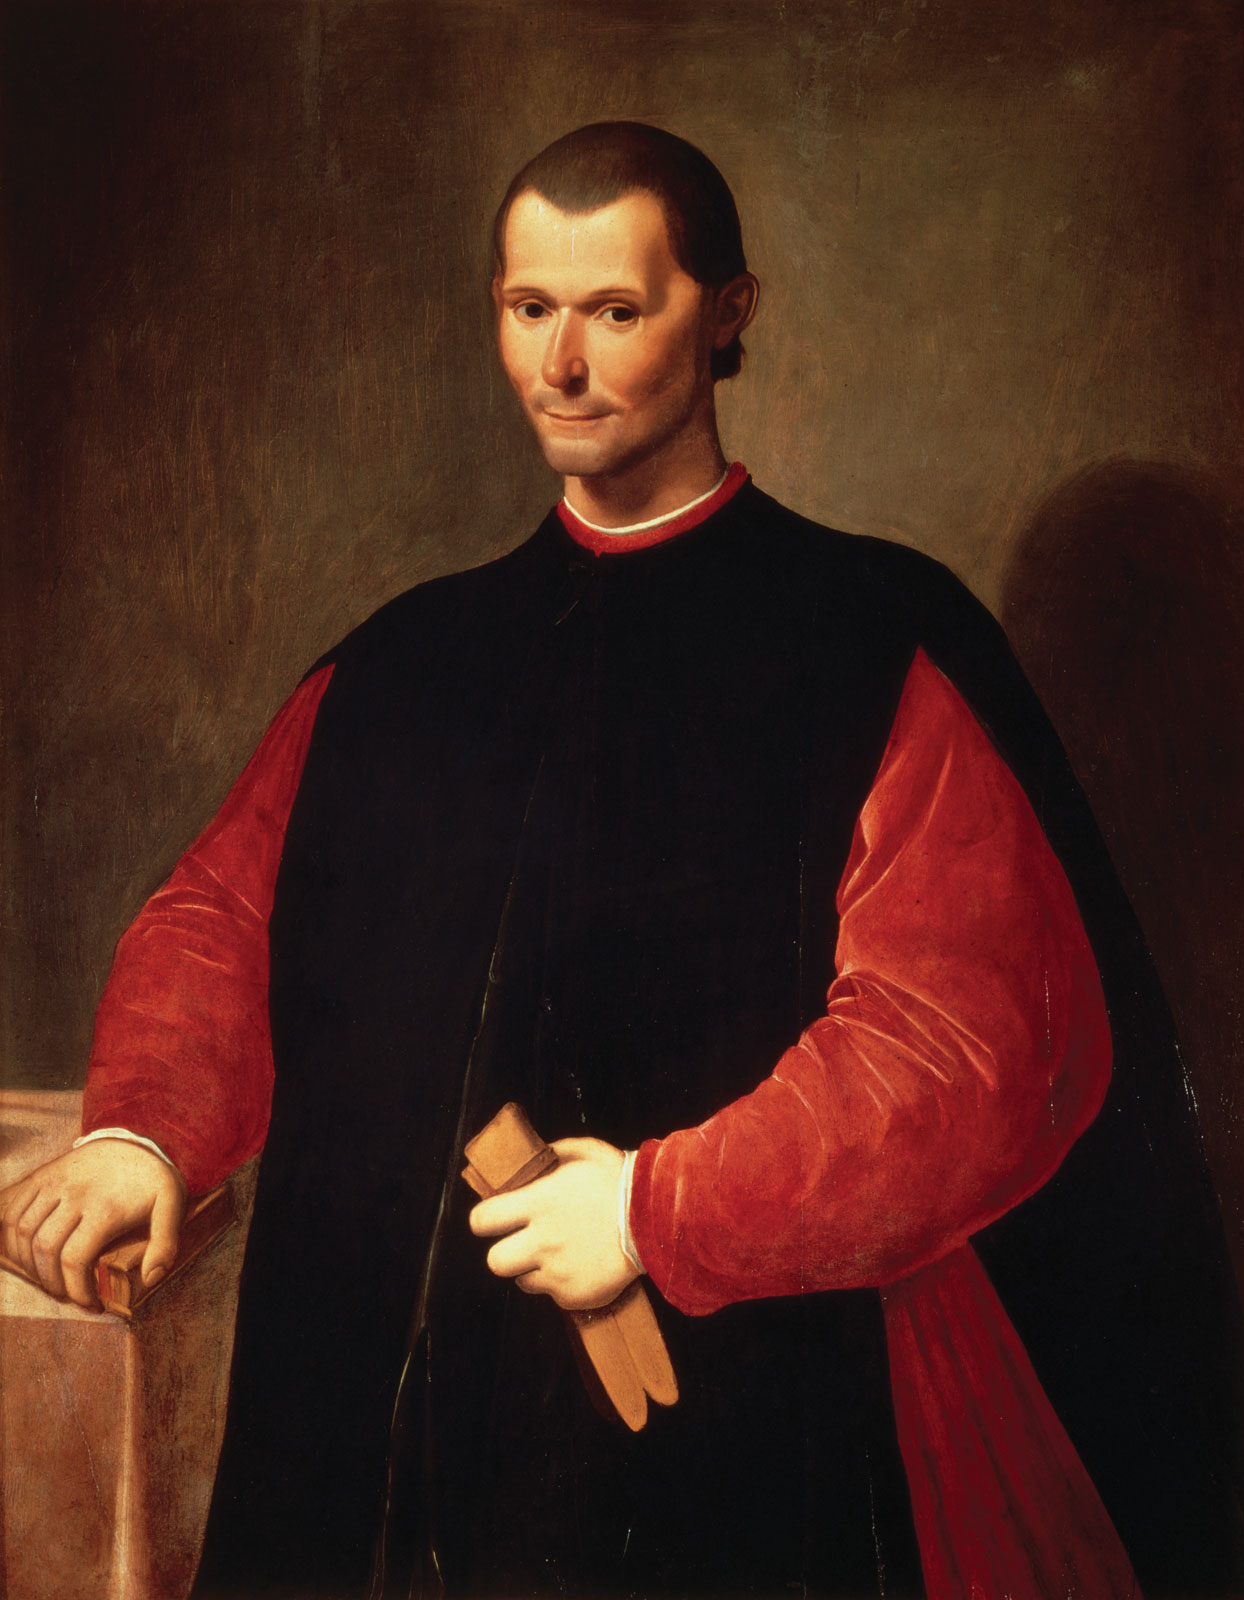 Niccolò Machiavelli Image public domain